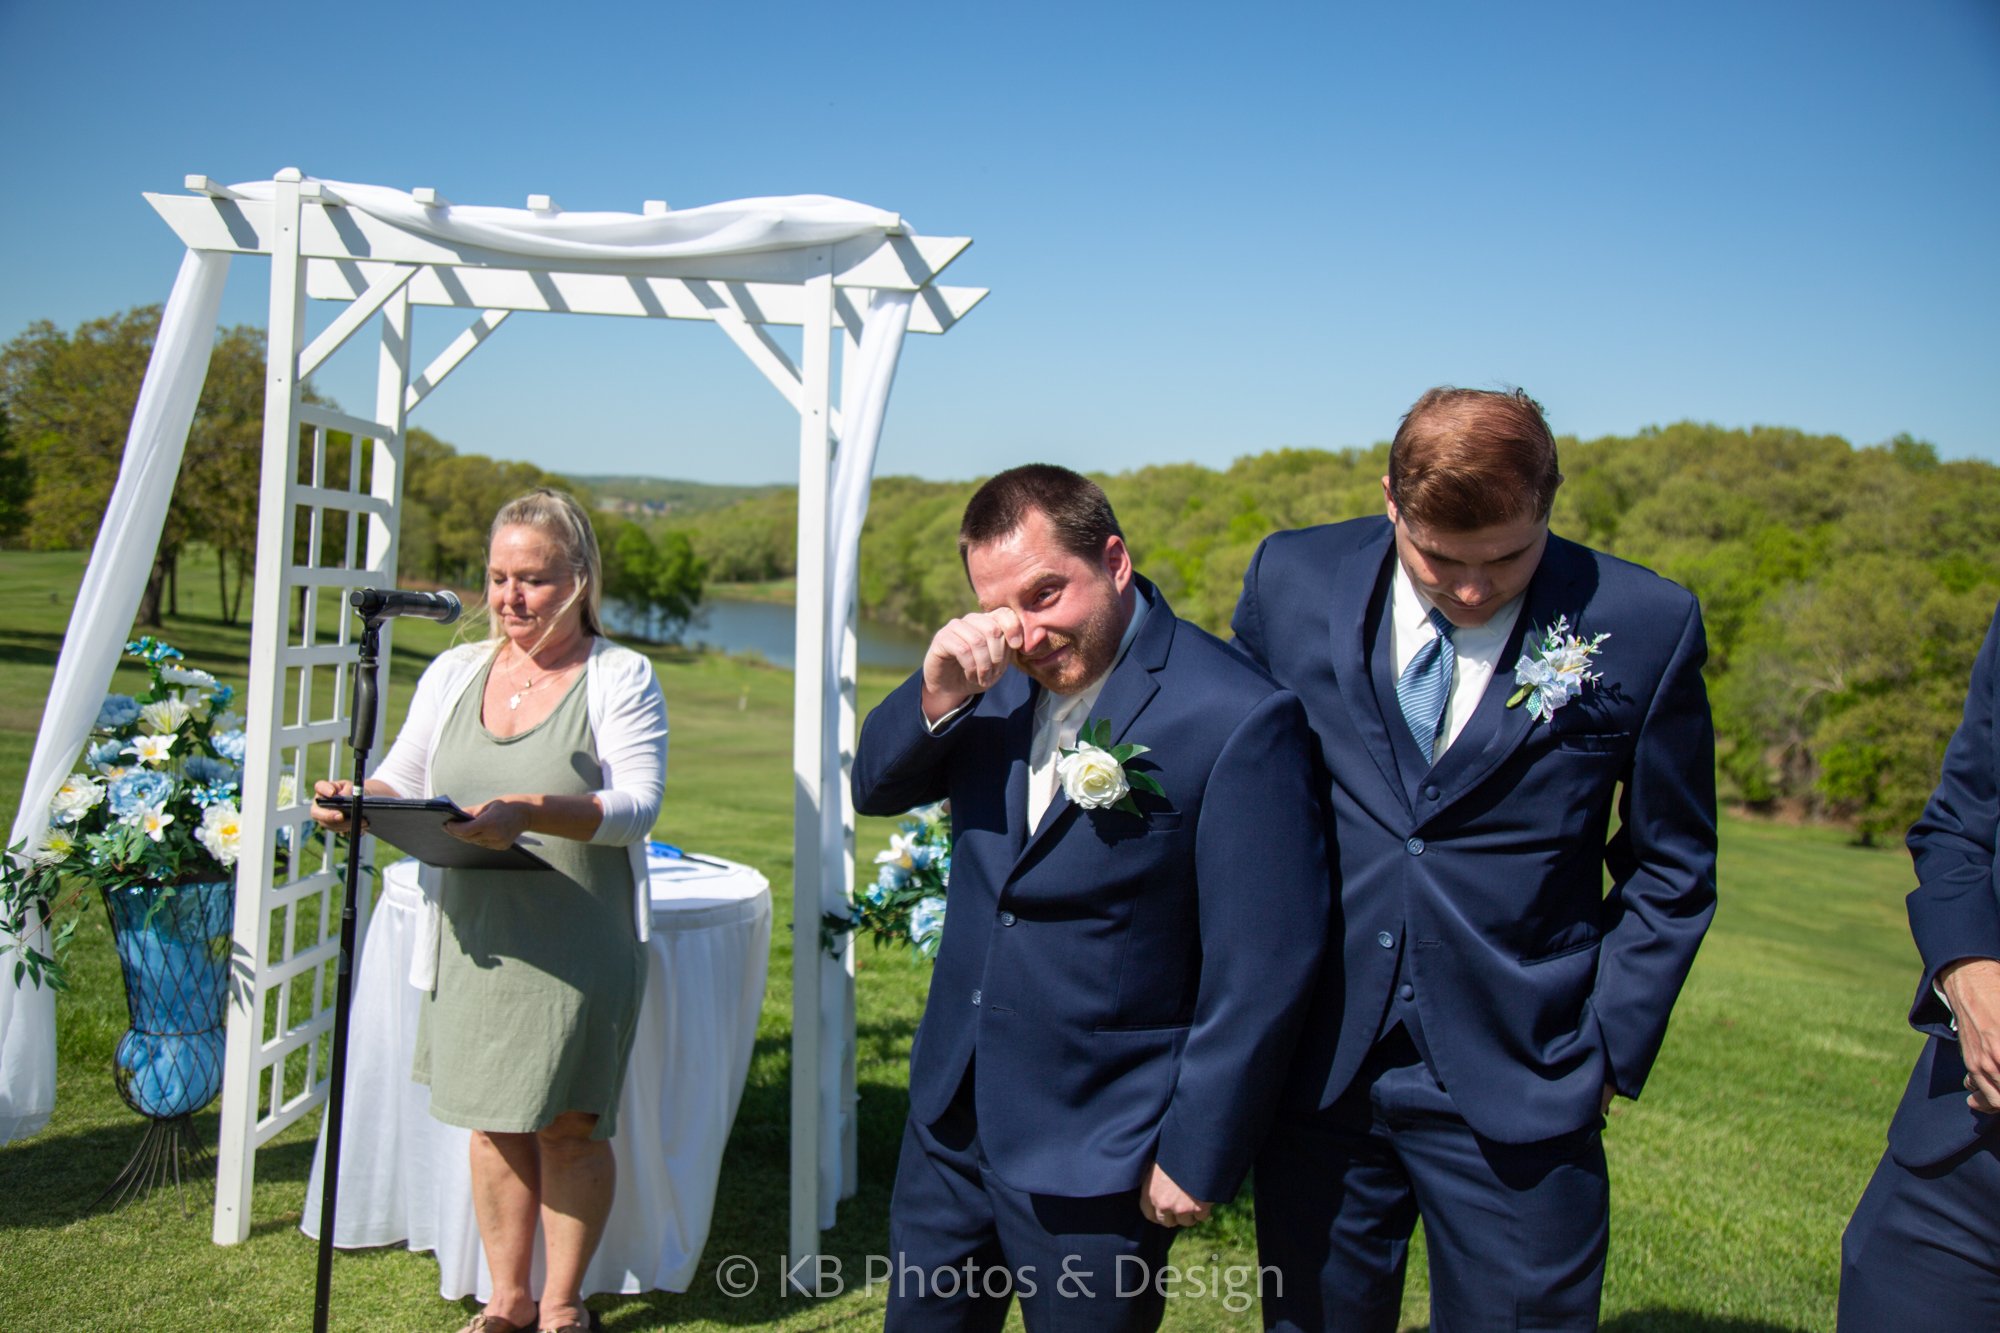 Destination Wedding Photography at Margaritaville Resort Lake of the Ozarks Missouri with KB Photos and Design